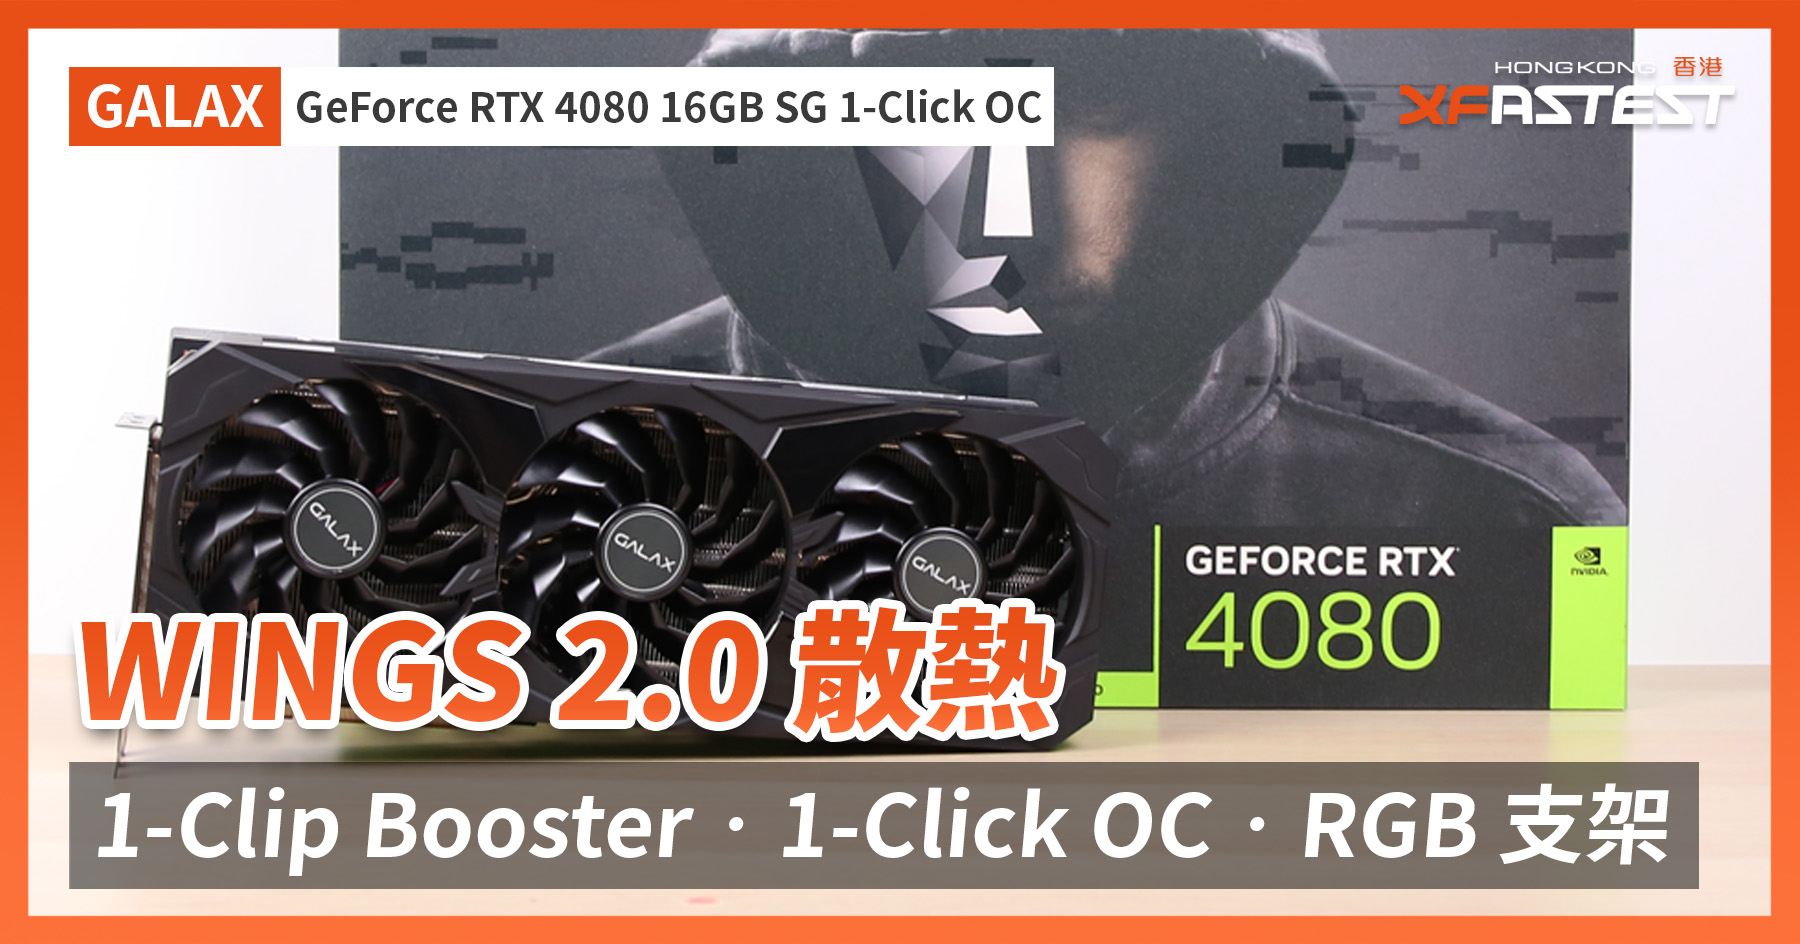  GALAX GeForce RTX™ 4080 SG (1-Click OC), Xtreme Tuner